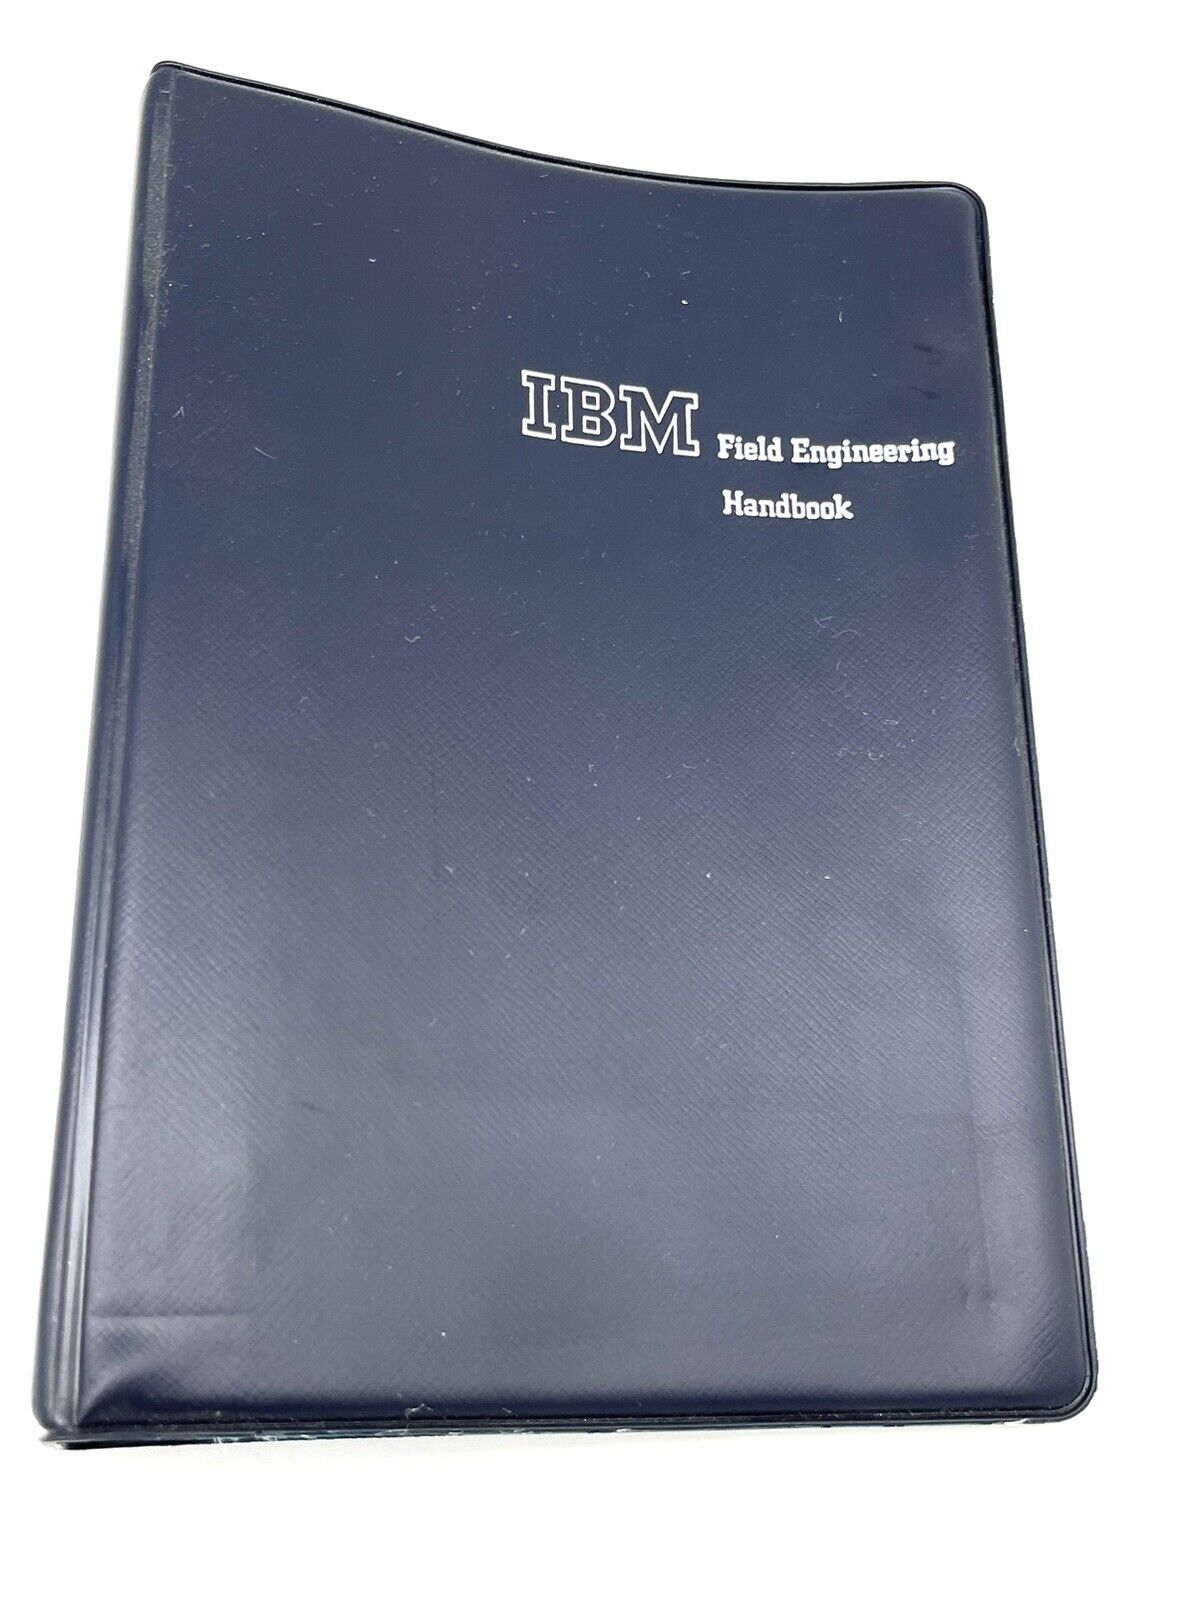 1981, 84, 88 IBM Field Engineering Handbook Computer Tech Manual Binder Case